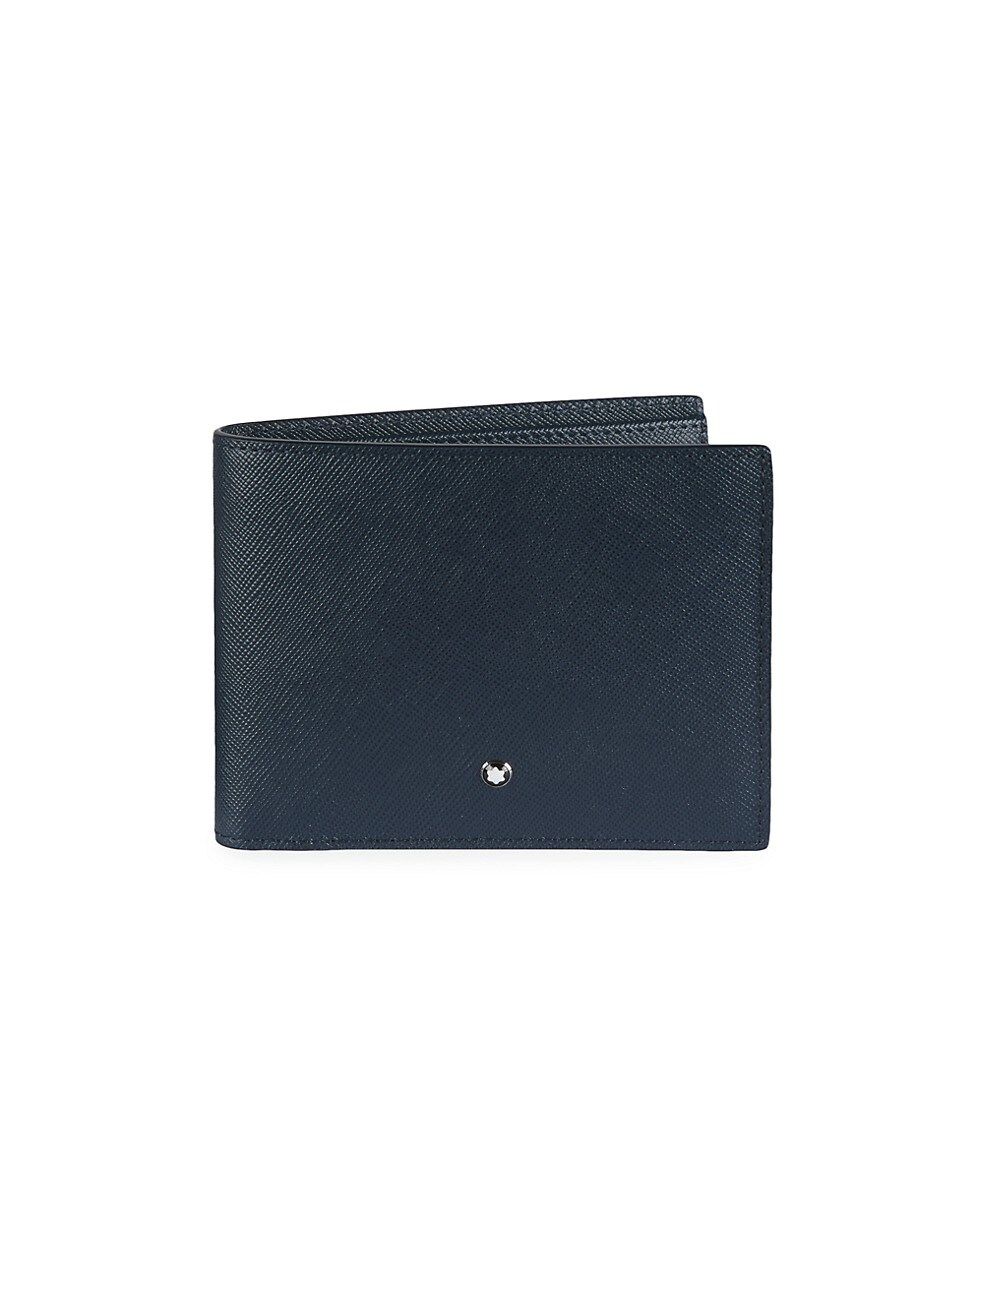 Montblanc Sartorial Leather Billfold Wallet | Saks Fifth Avenue